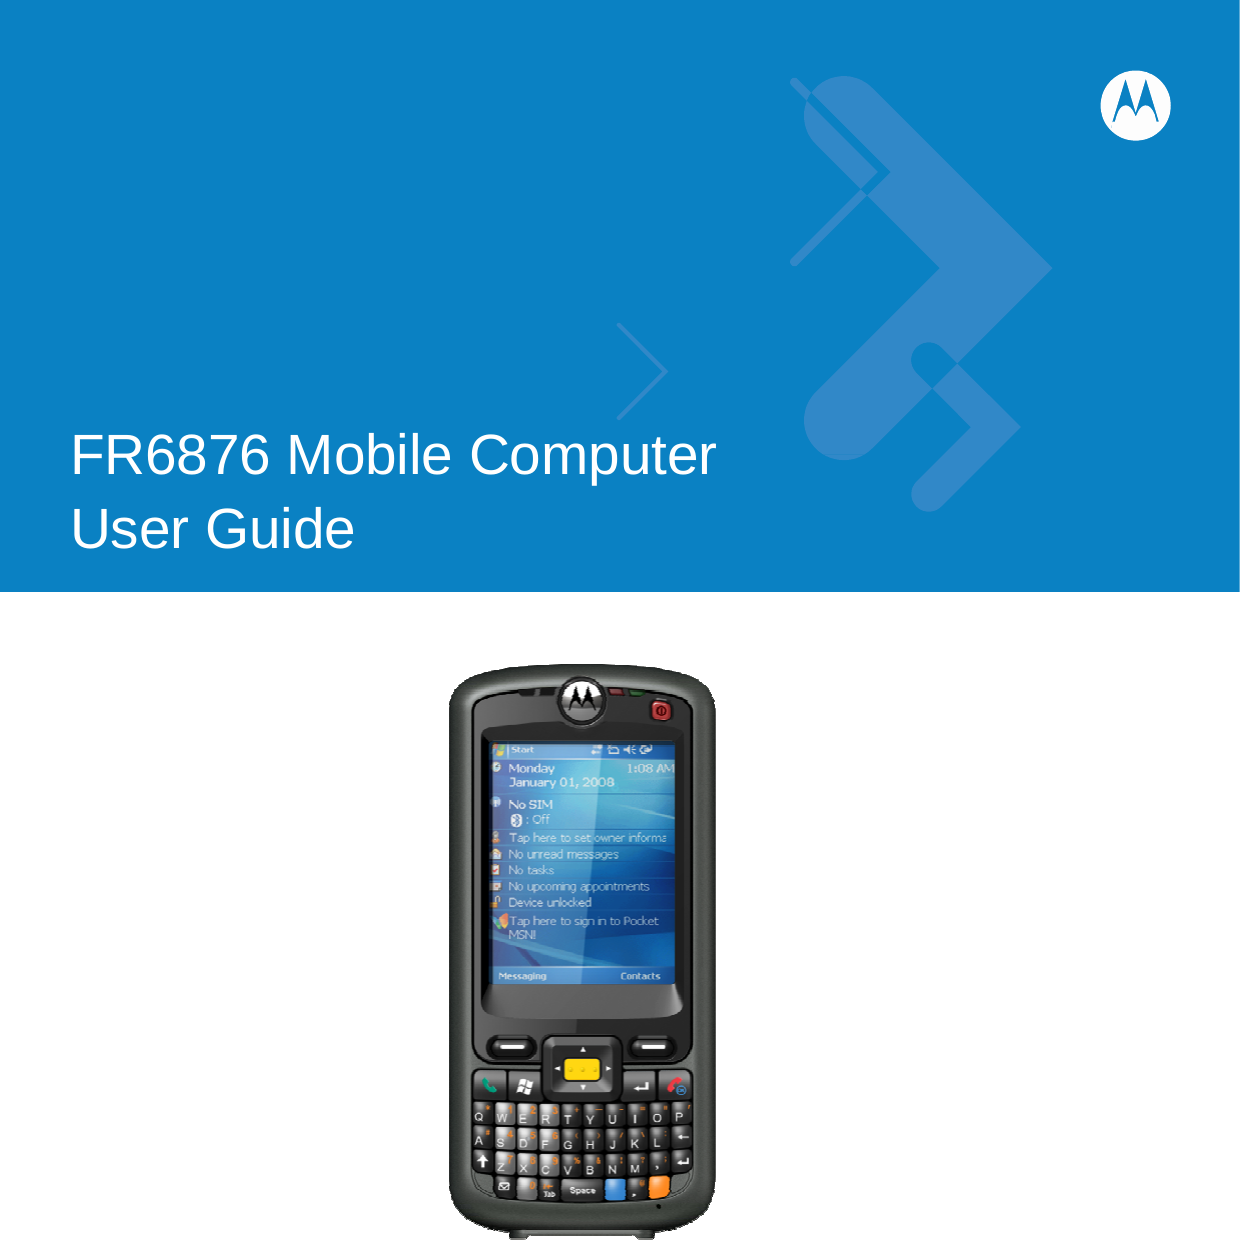              FR6876 Mobile Computer   User Guide        